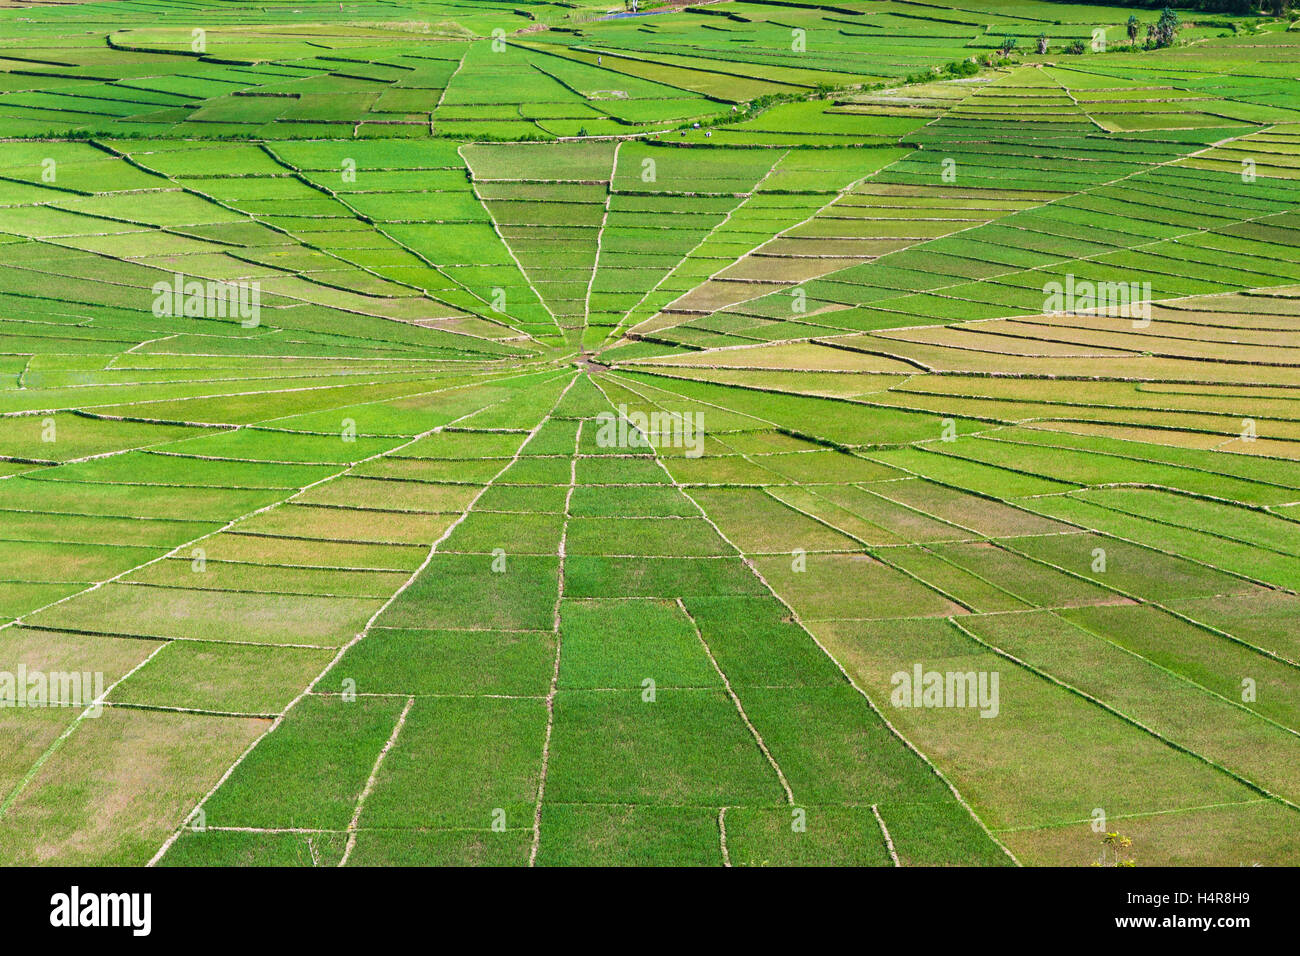 Spider web rice fields. Stock Photo